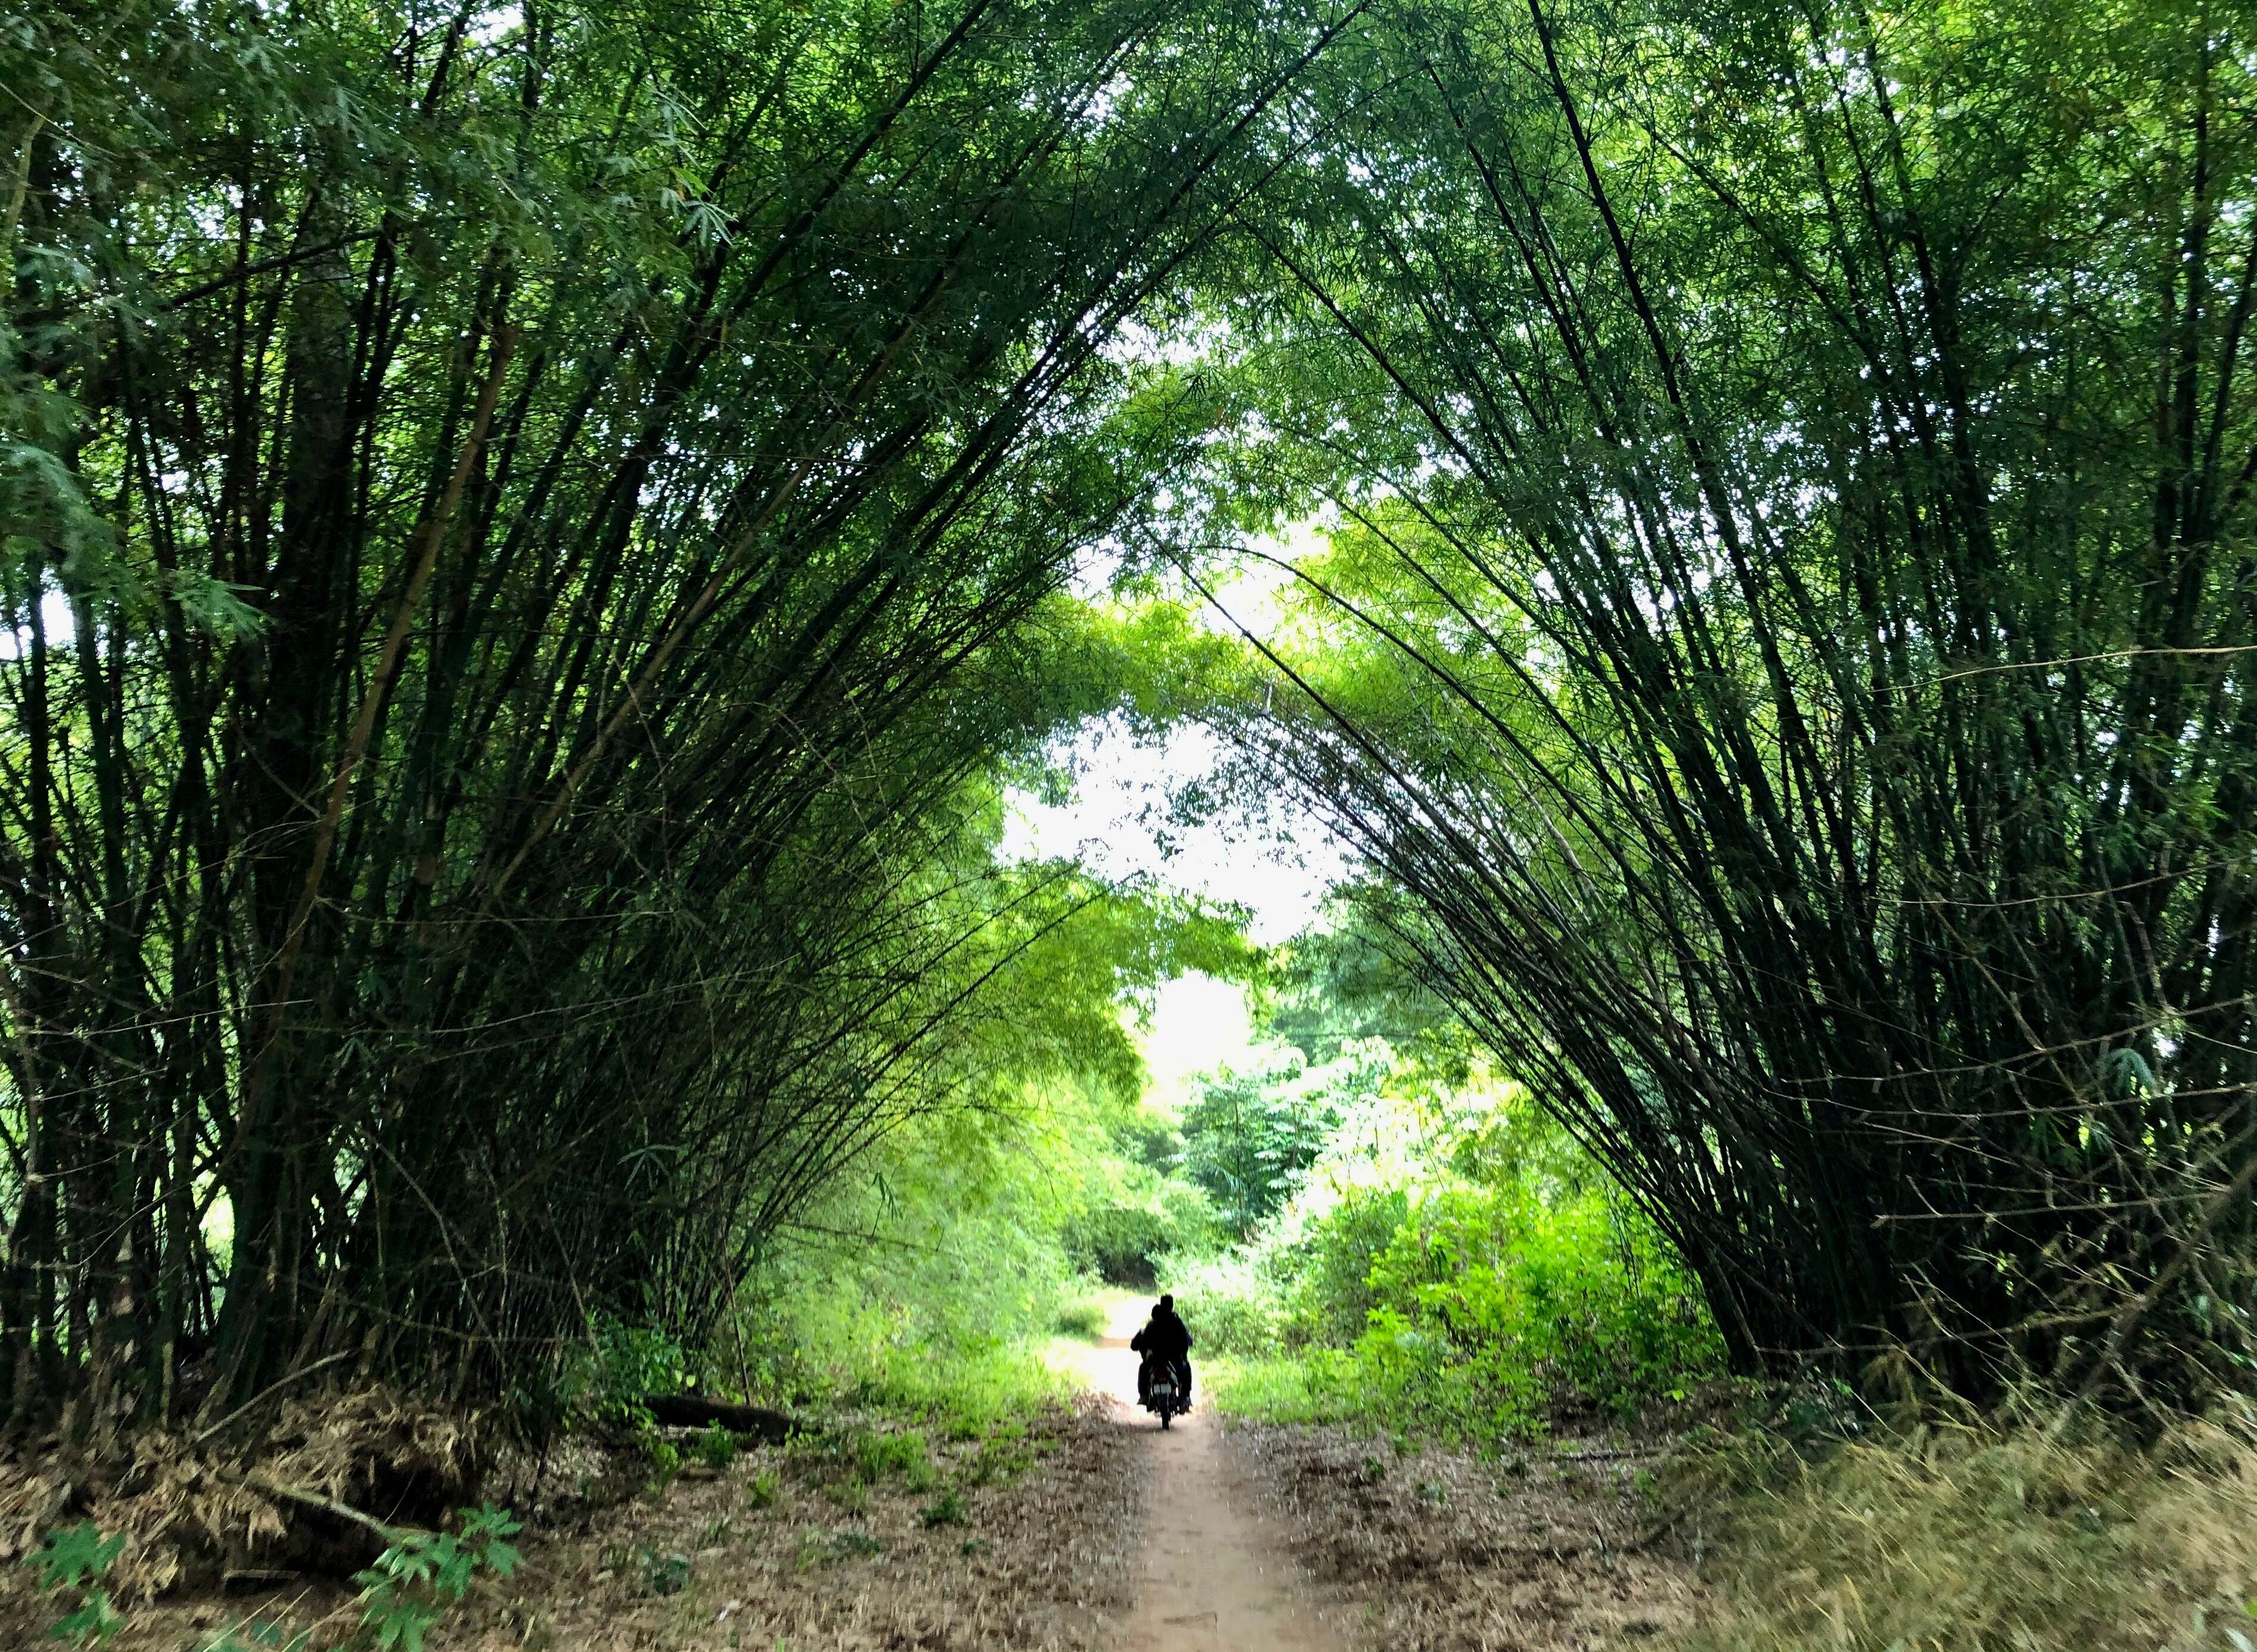 Bosque de bambús, un paisaje típico del bosque de Yangambi.